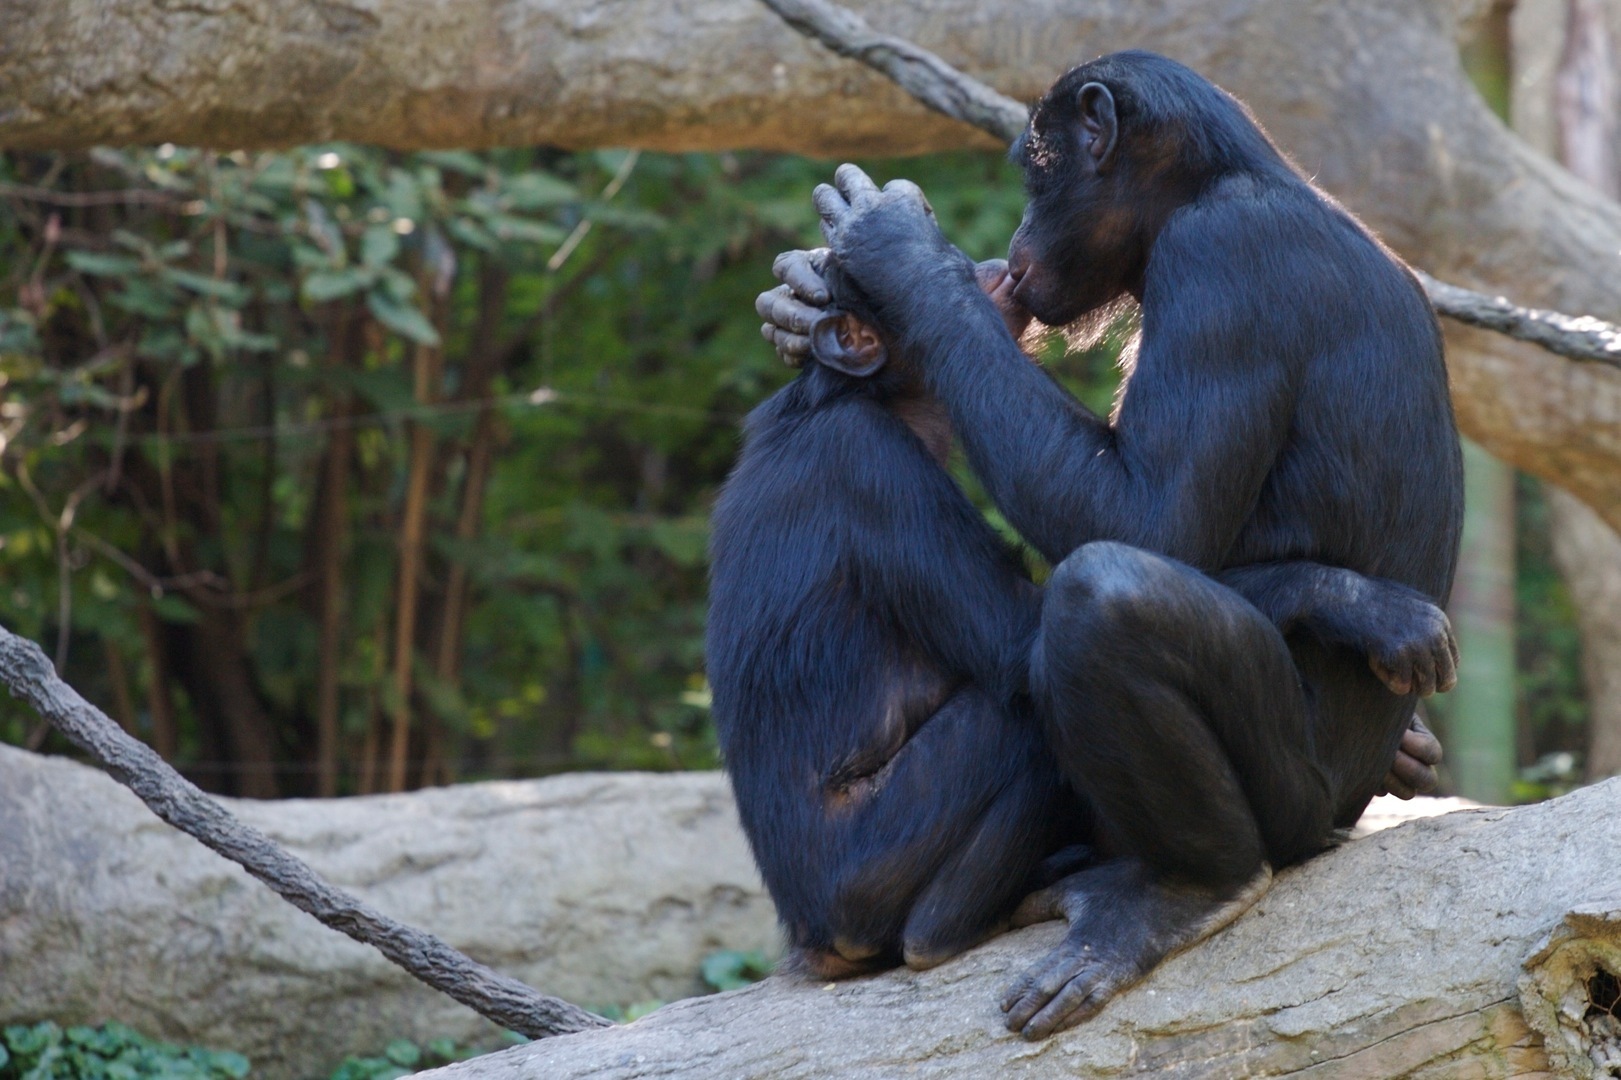 Image of bonobos from www.freewallpaperspot.com